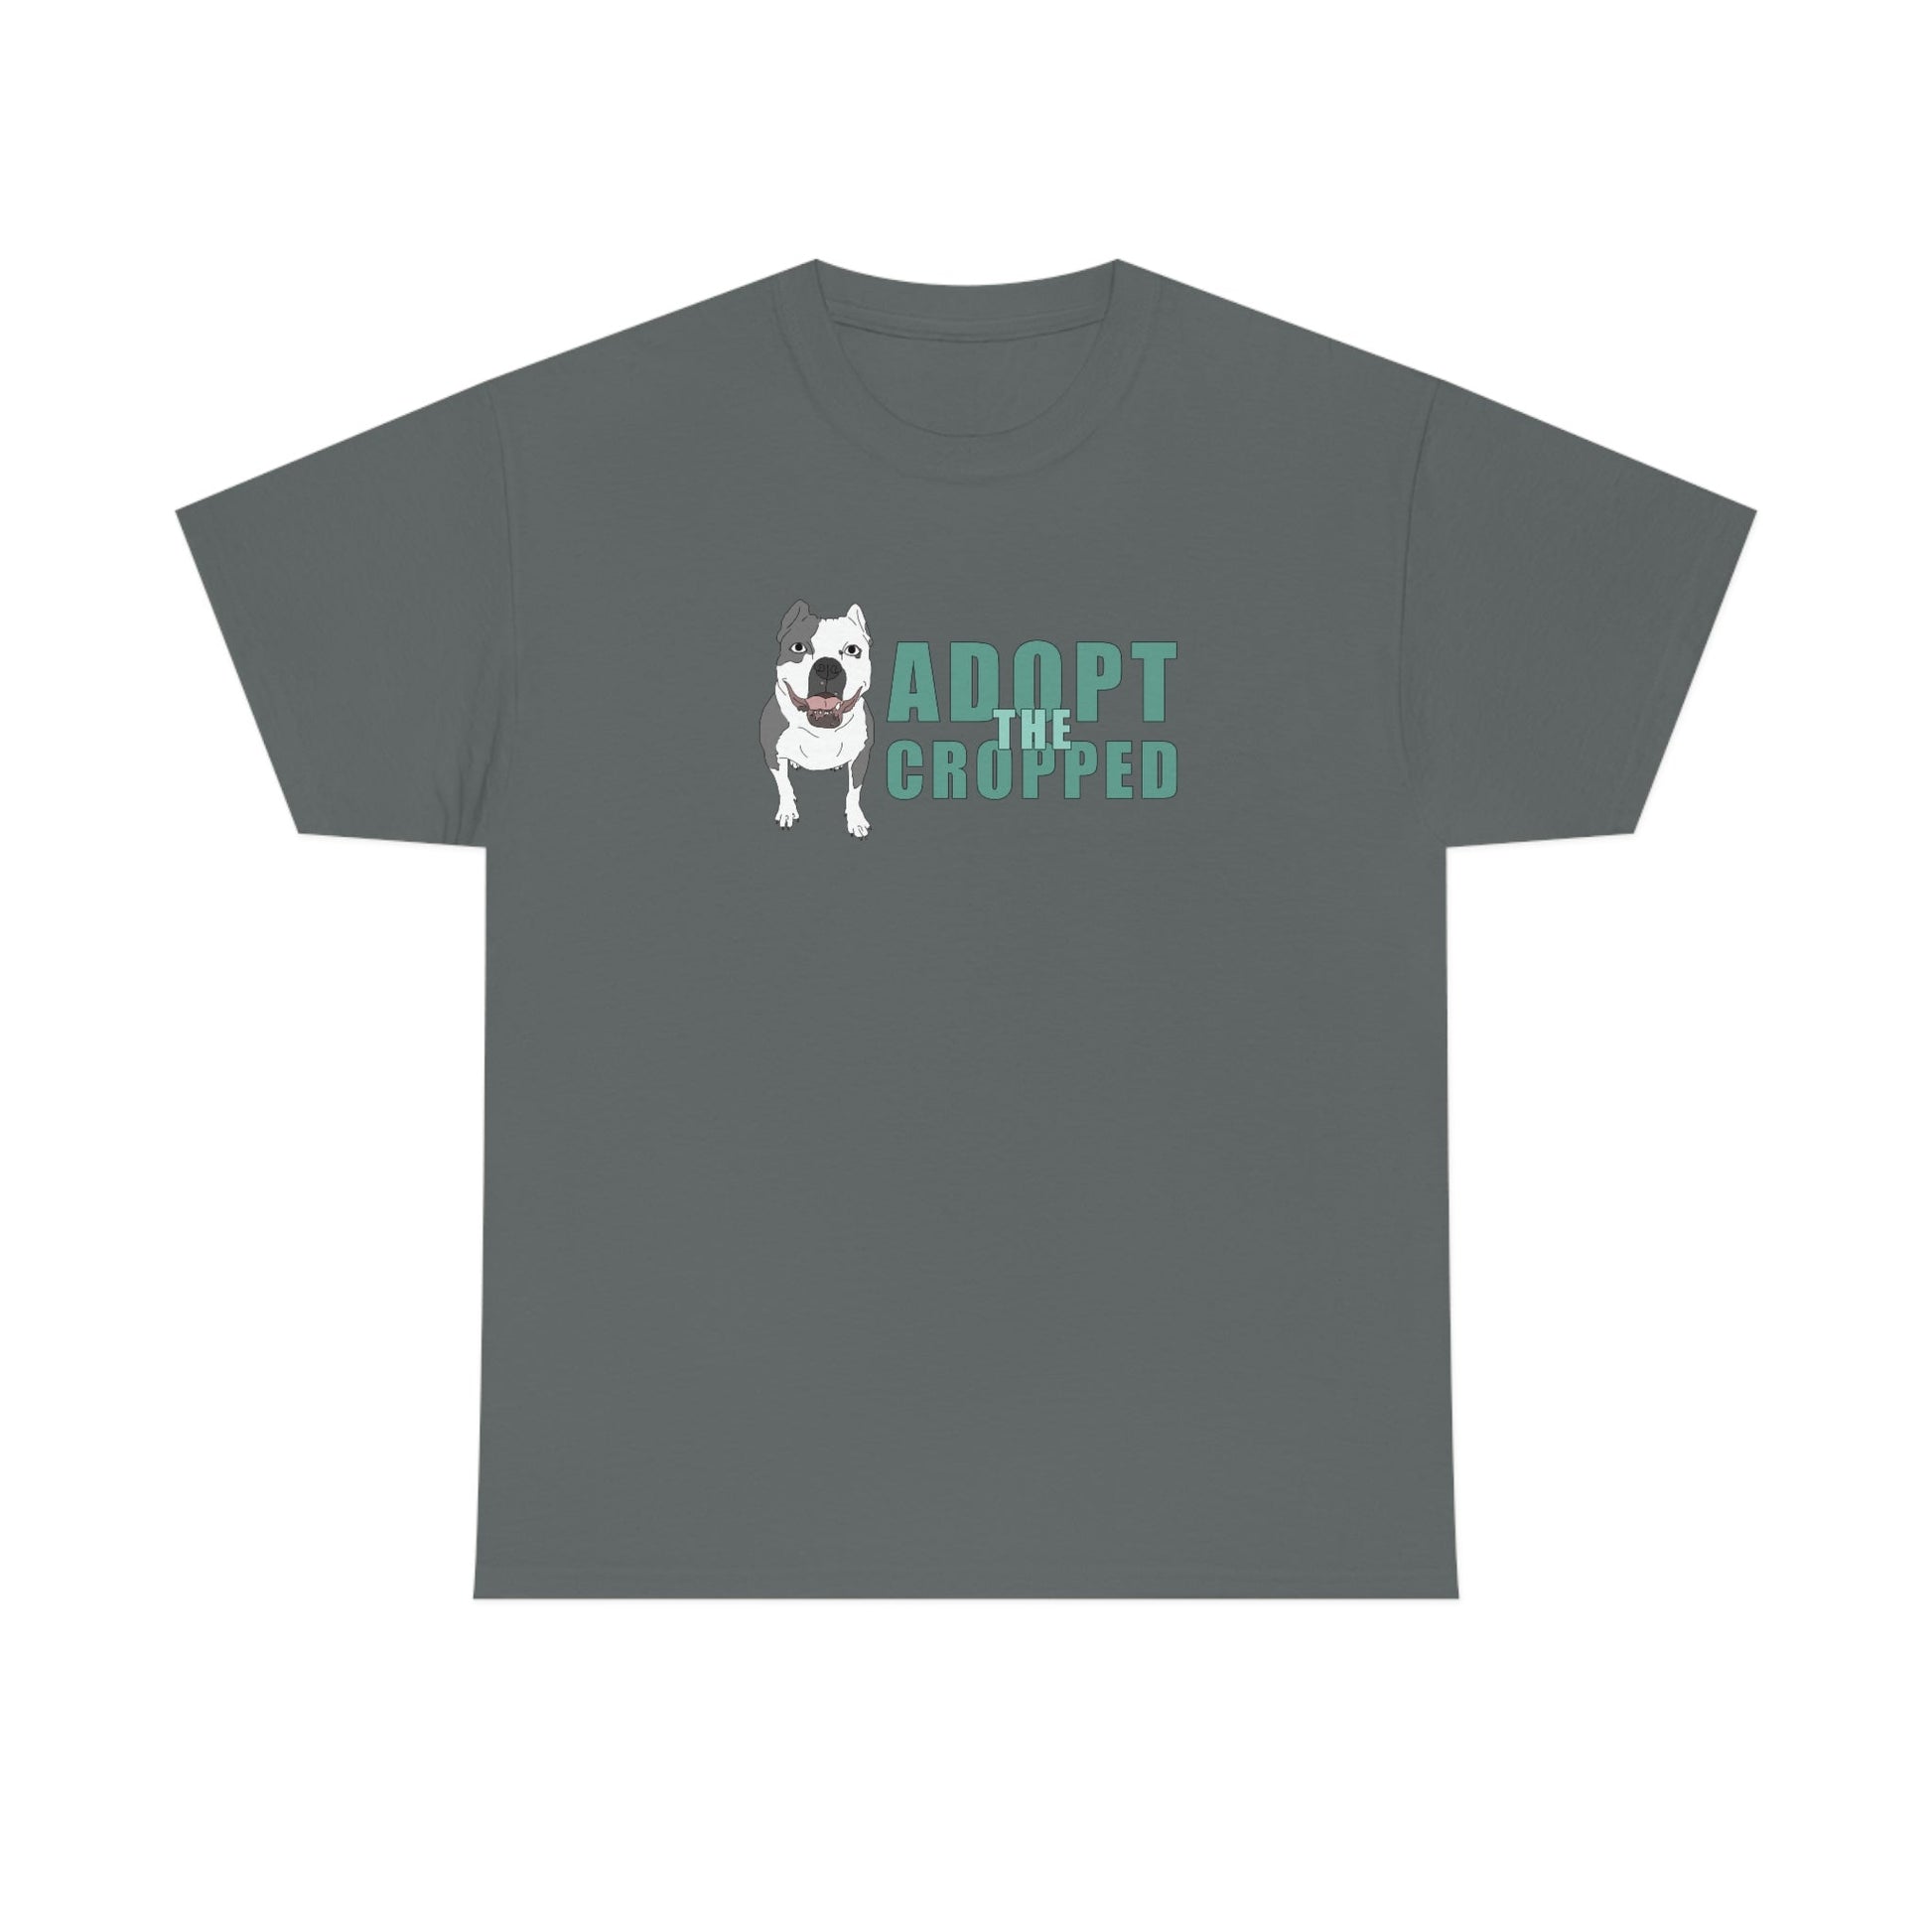 Adopt The Cropped | T-shirt - Detezi Designs-14441651590803595938